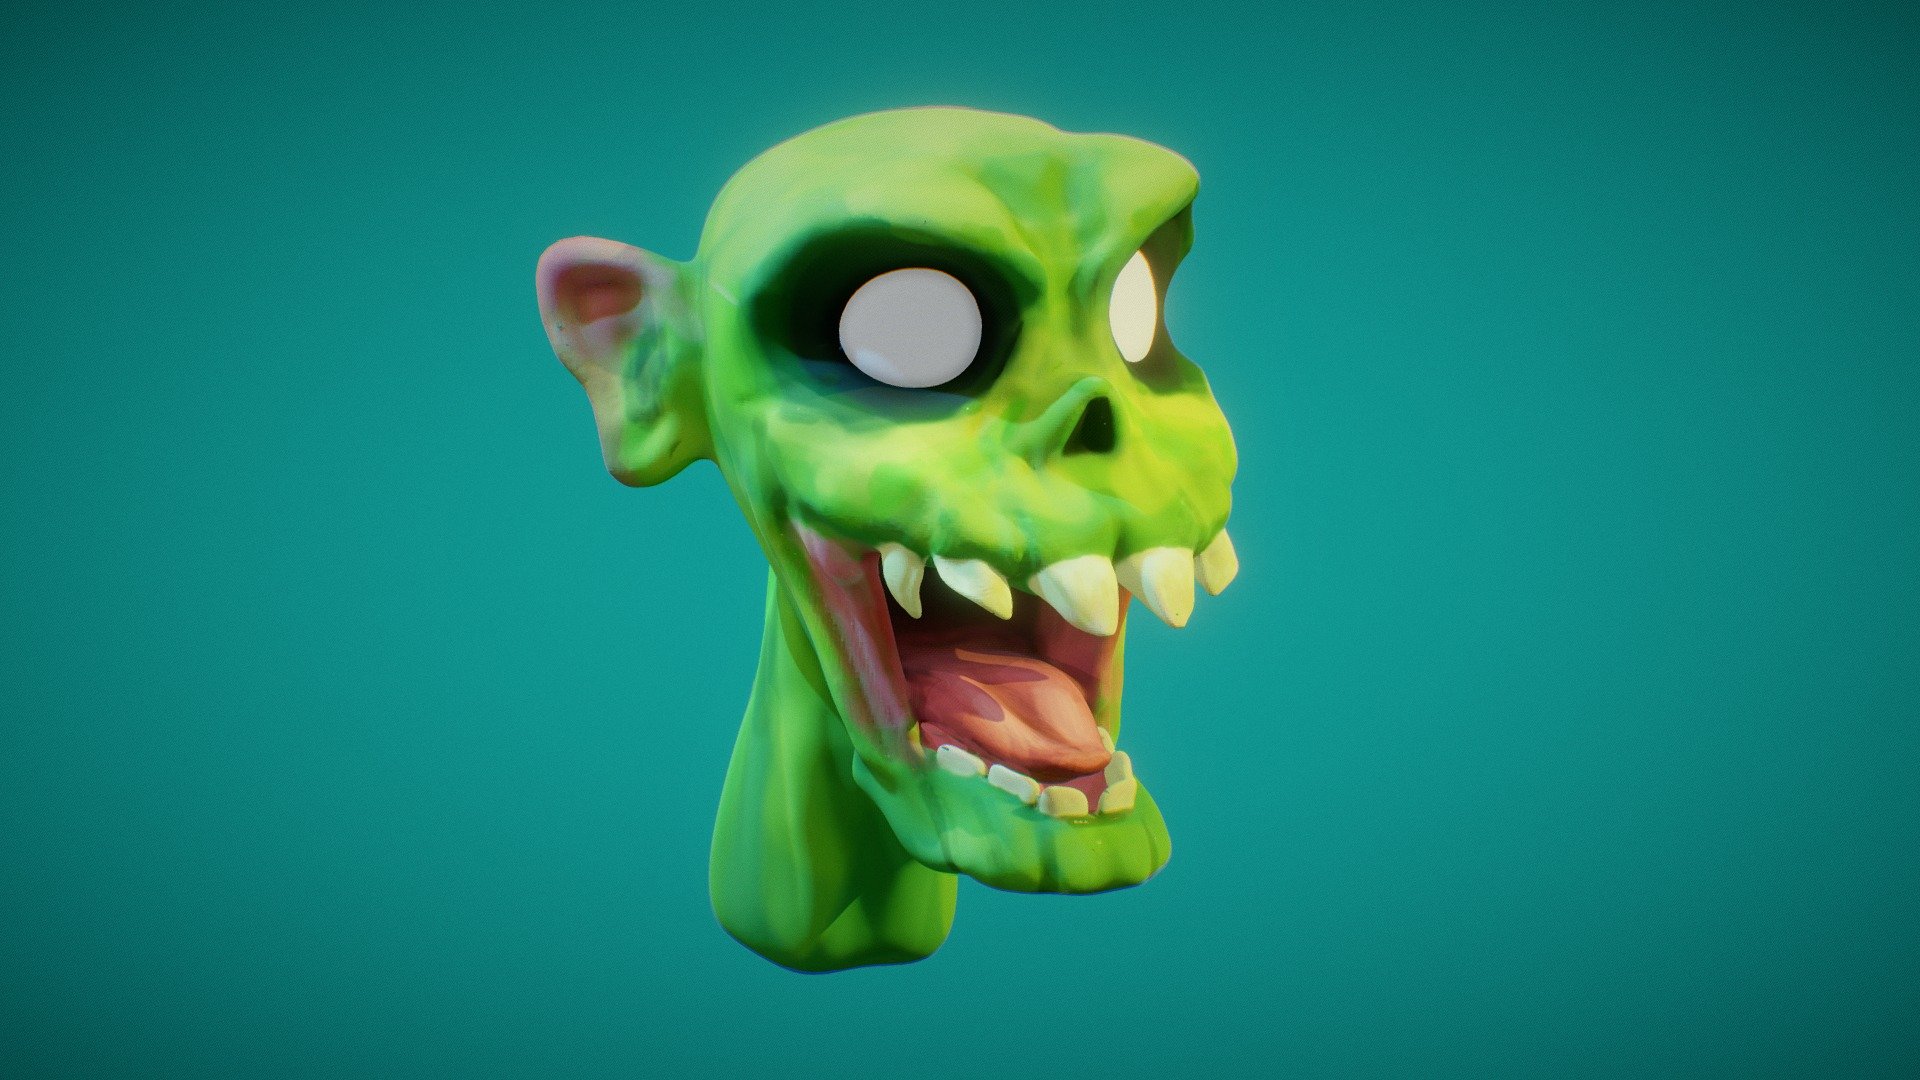 Cartoon Zombie Head Sculpt 
(Blender)

By @magicwendric

Follow me!
https://www.instagram.com/magicwendric/ - Cartoon Zombie (Blender Sculpt) - Download Free 3D model by magicwendric 3d model